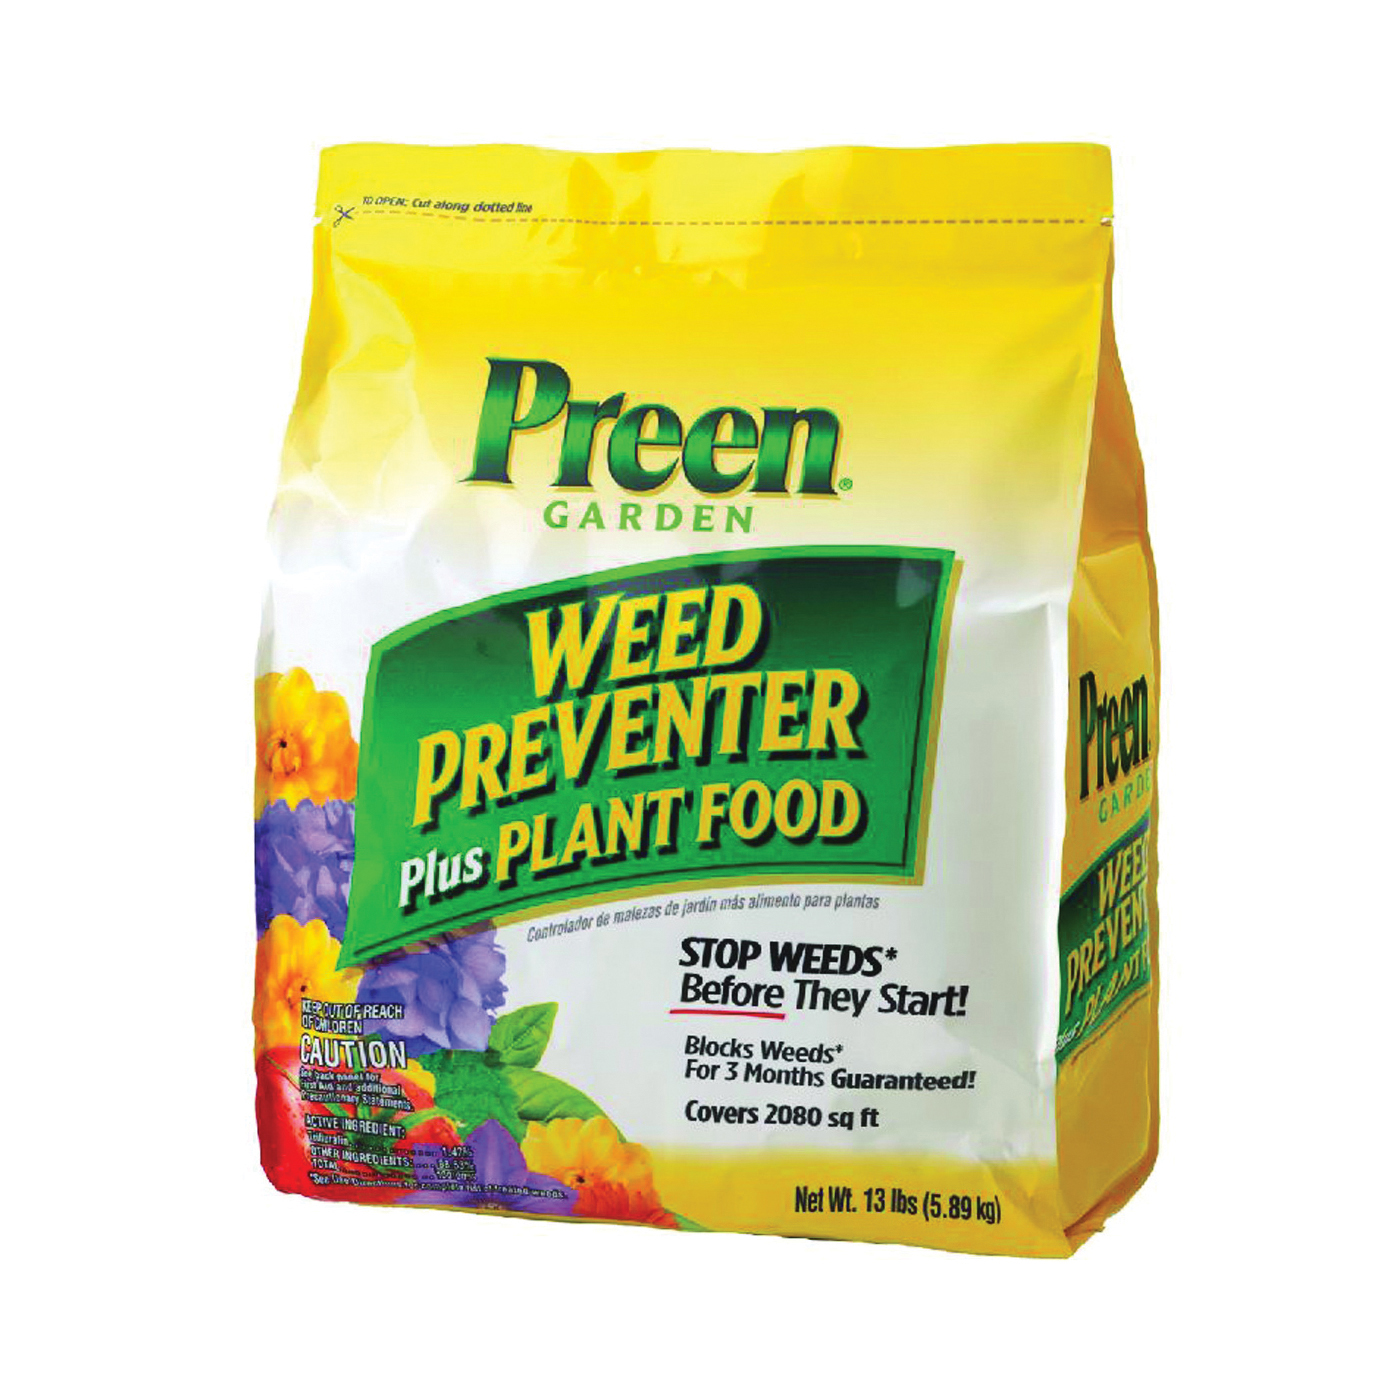 21-63905 Weed Preventer Plus Plant Food, Granular, 13 lb Bag